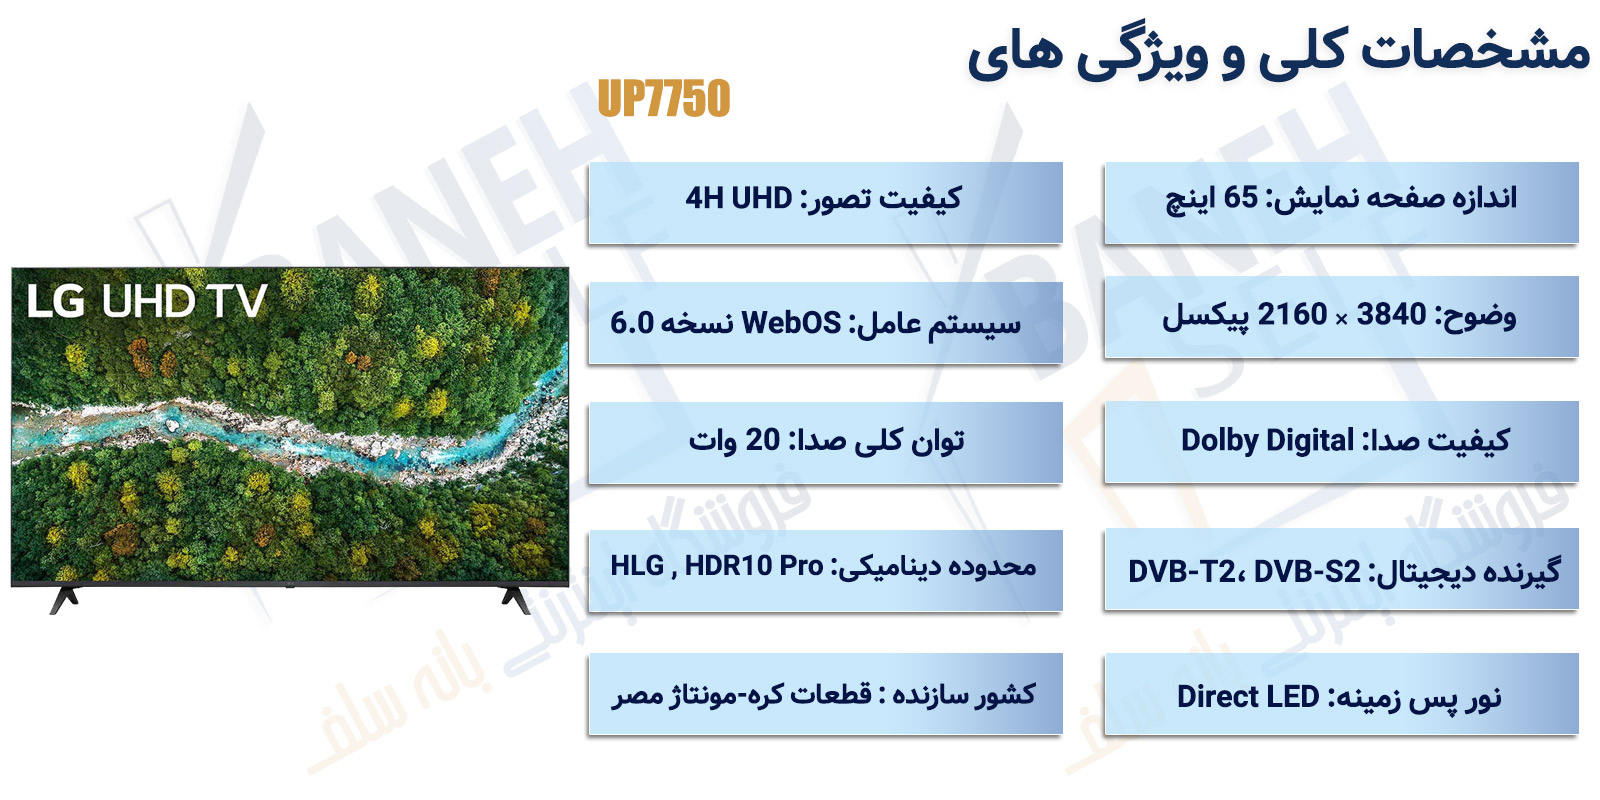 اینفوگرافیک-تلویزیون-هوشمند-4K-ال-جی-65-اینچ-مدل-UP7750اینفوگرافیک-تلویزیون-هوشمند-4K-ال-جی-65-اینچ-مدل-UP7750